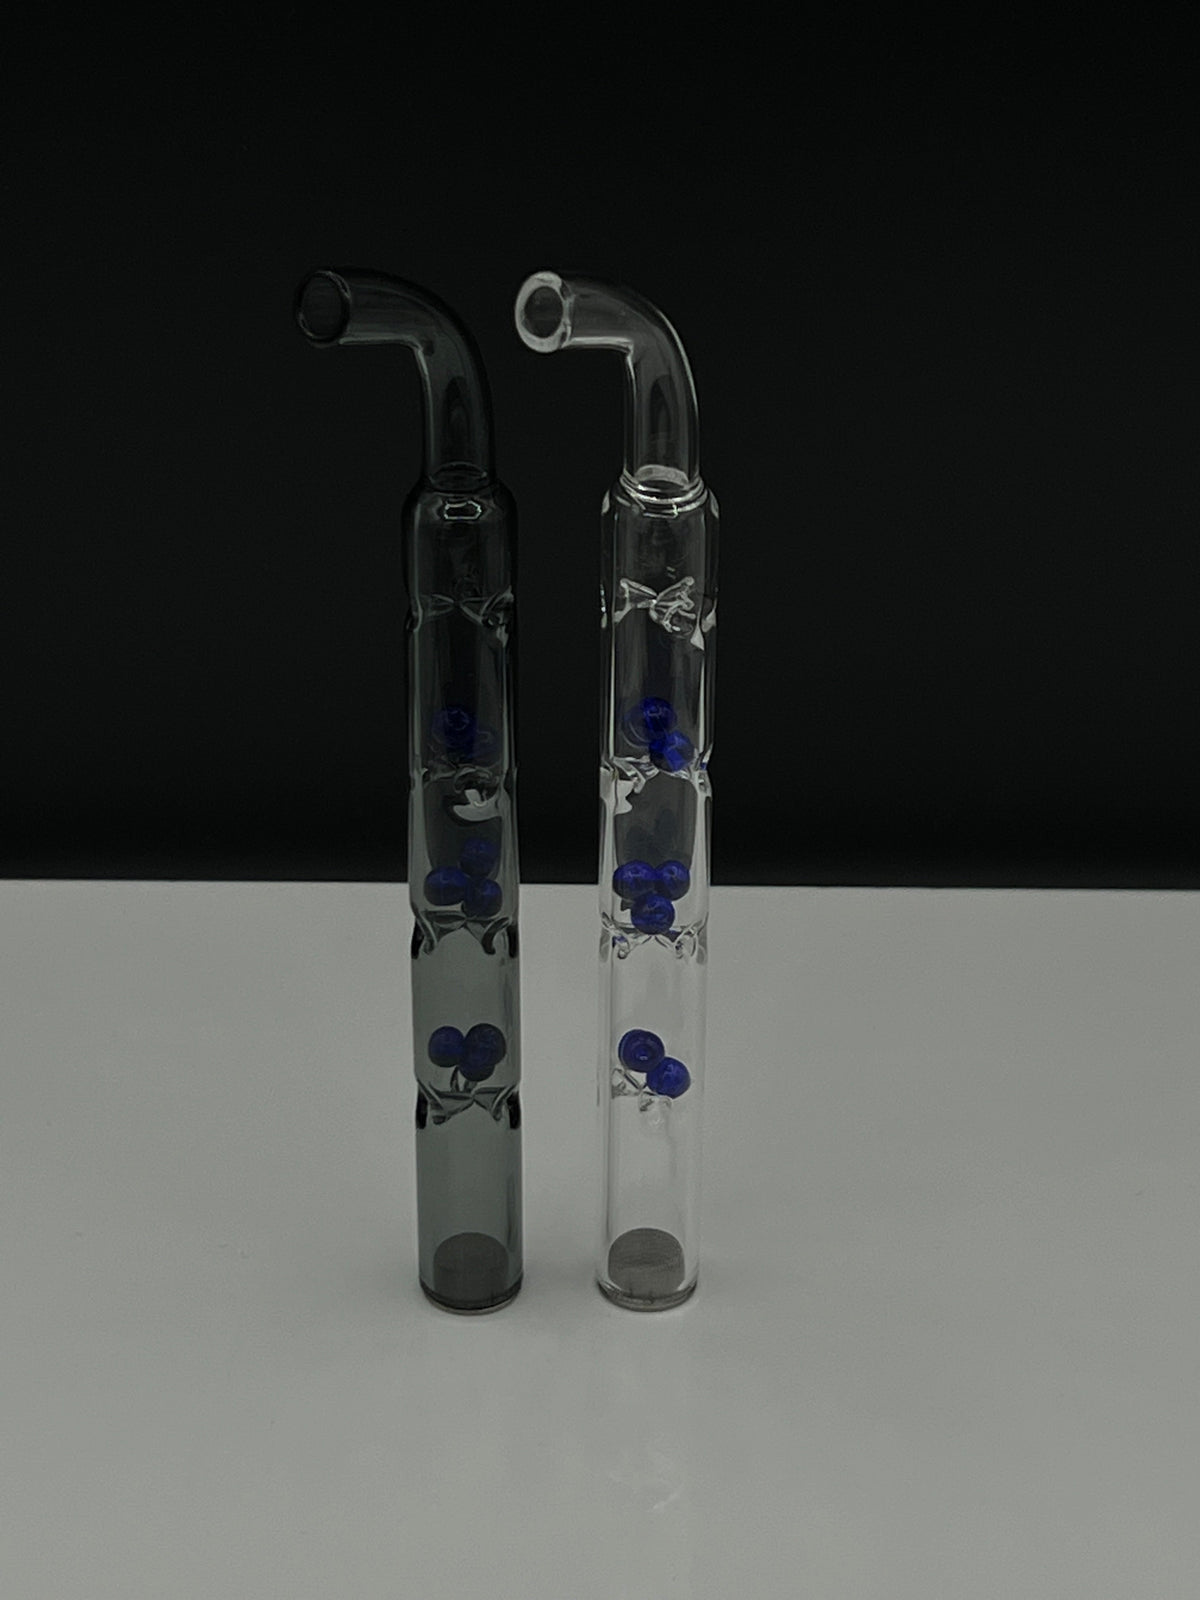 Tinymight 2 Bent Cooling Stem | Bb9 3D Flow